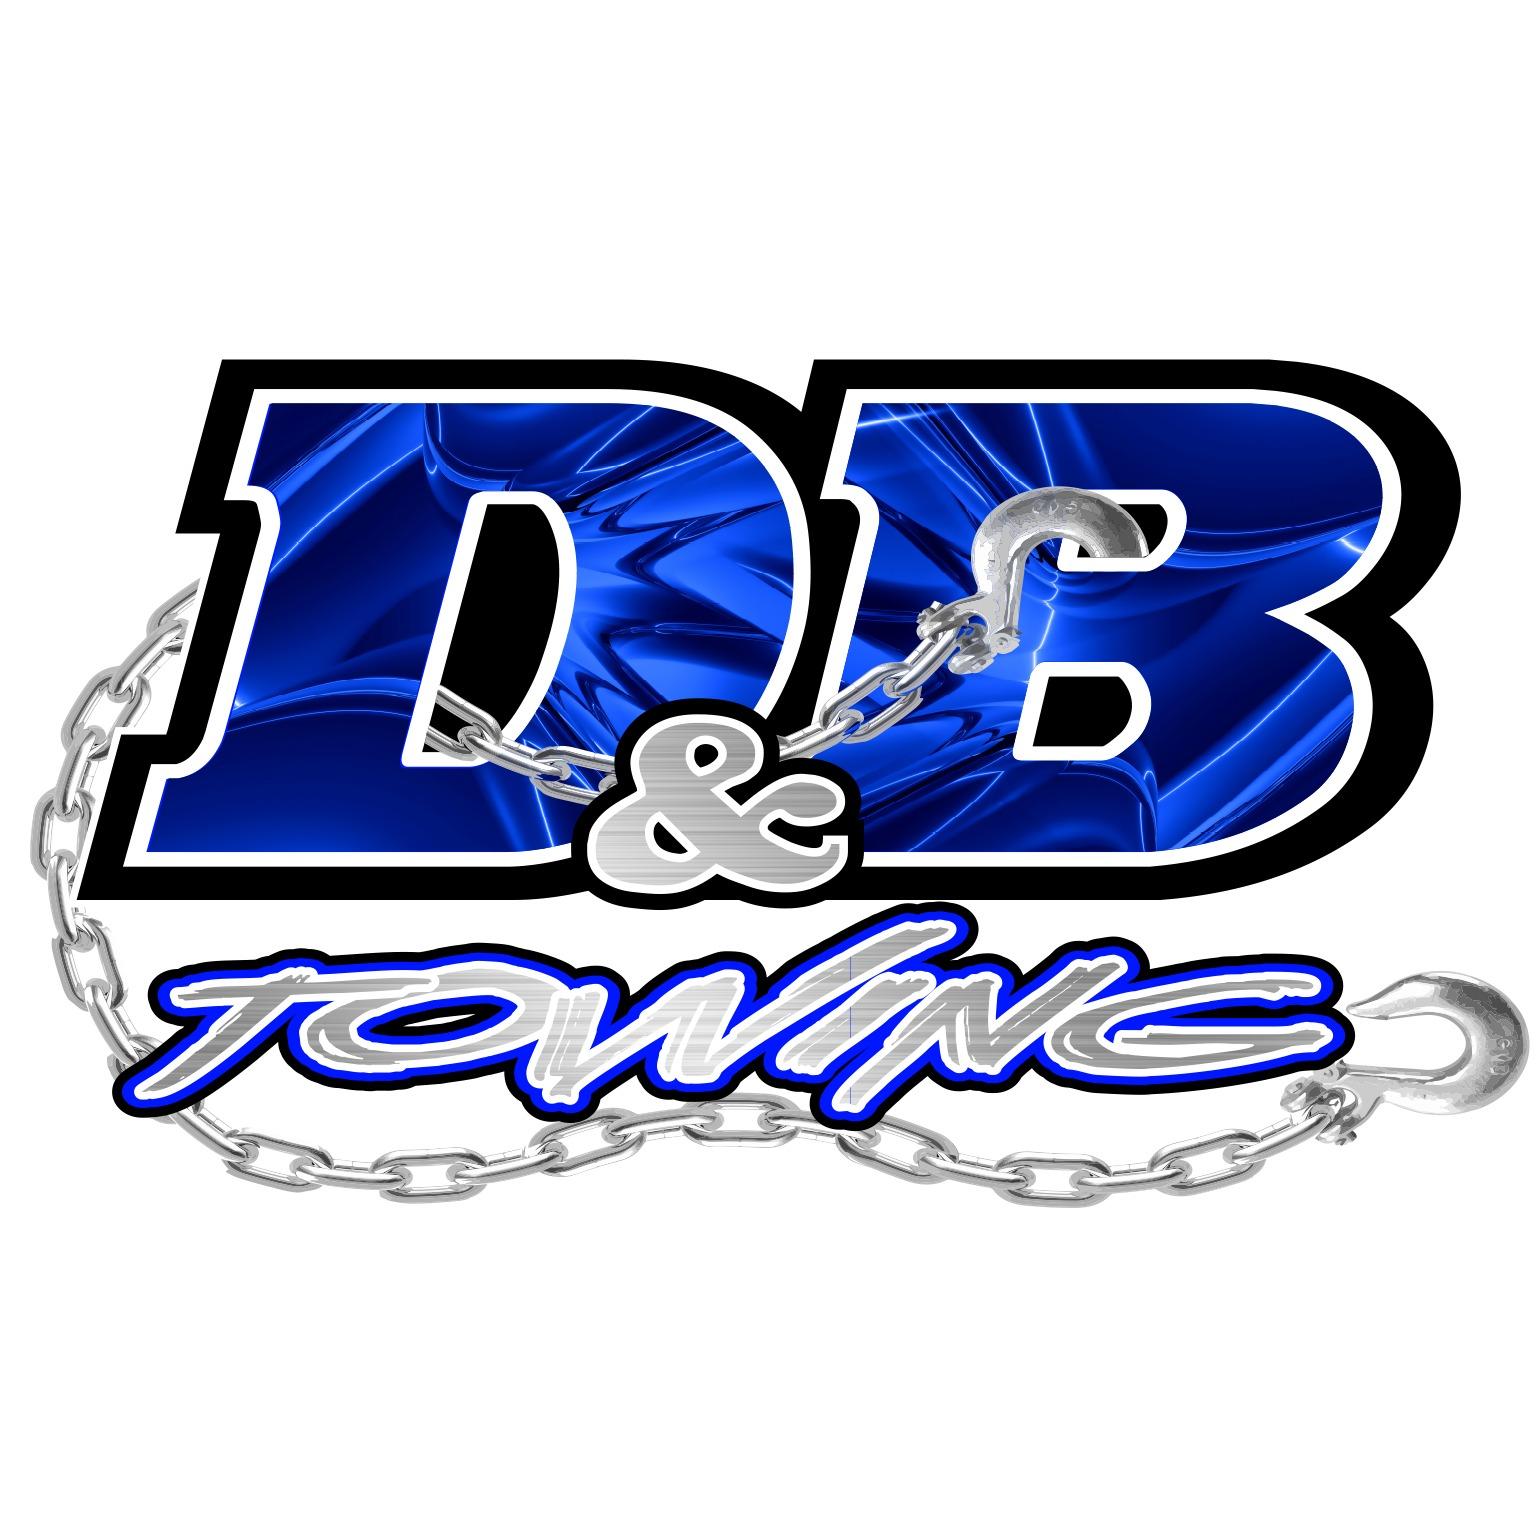 D & B Towing LLC Logo